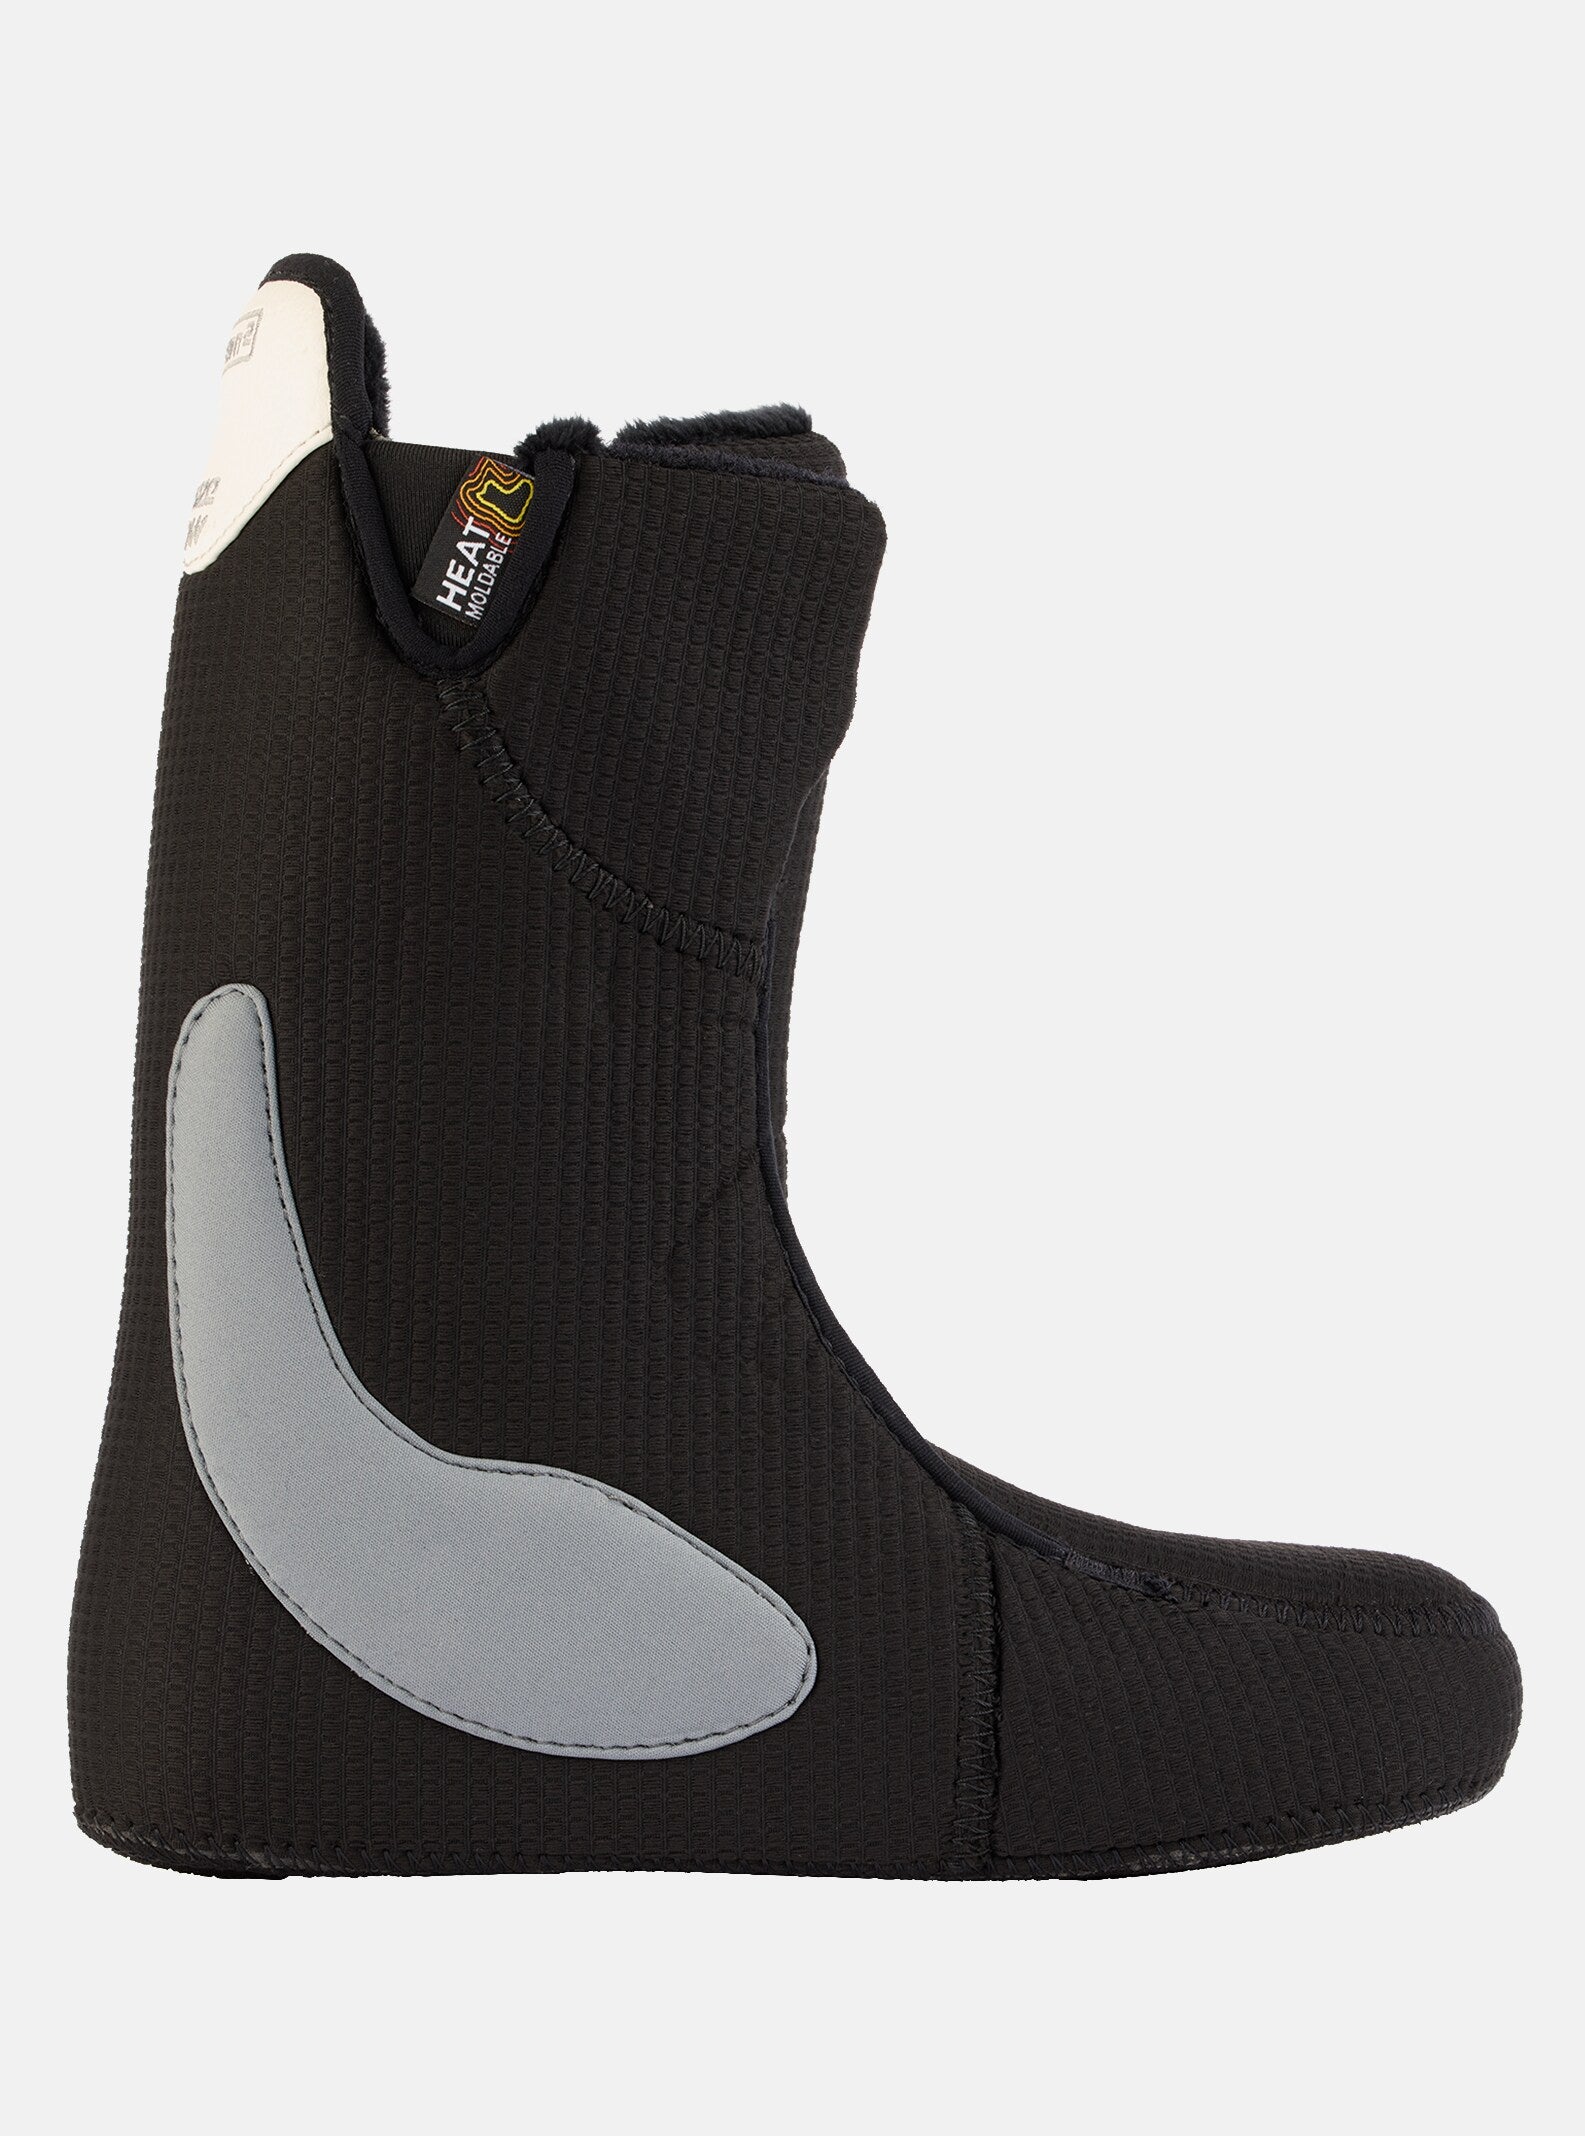 Women's Limelight BOA® Snowboard Boots, Stout White